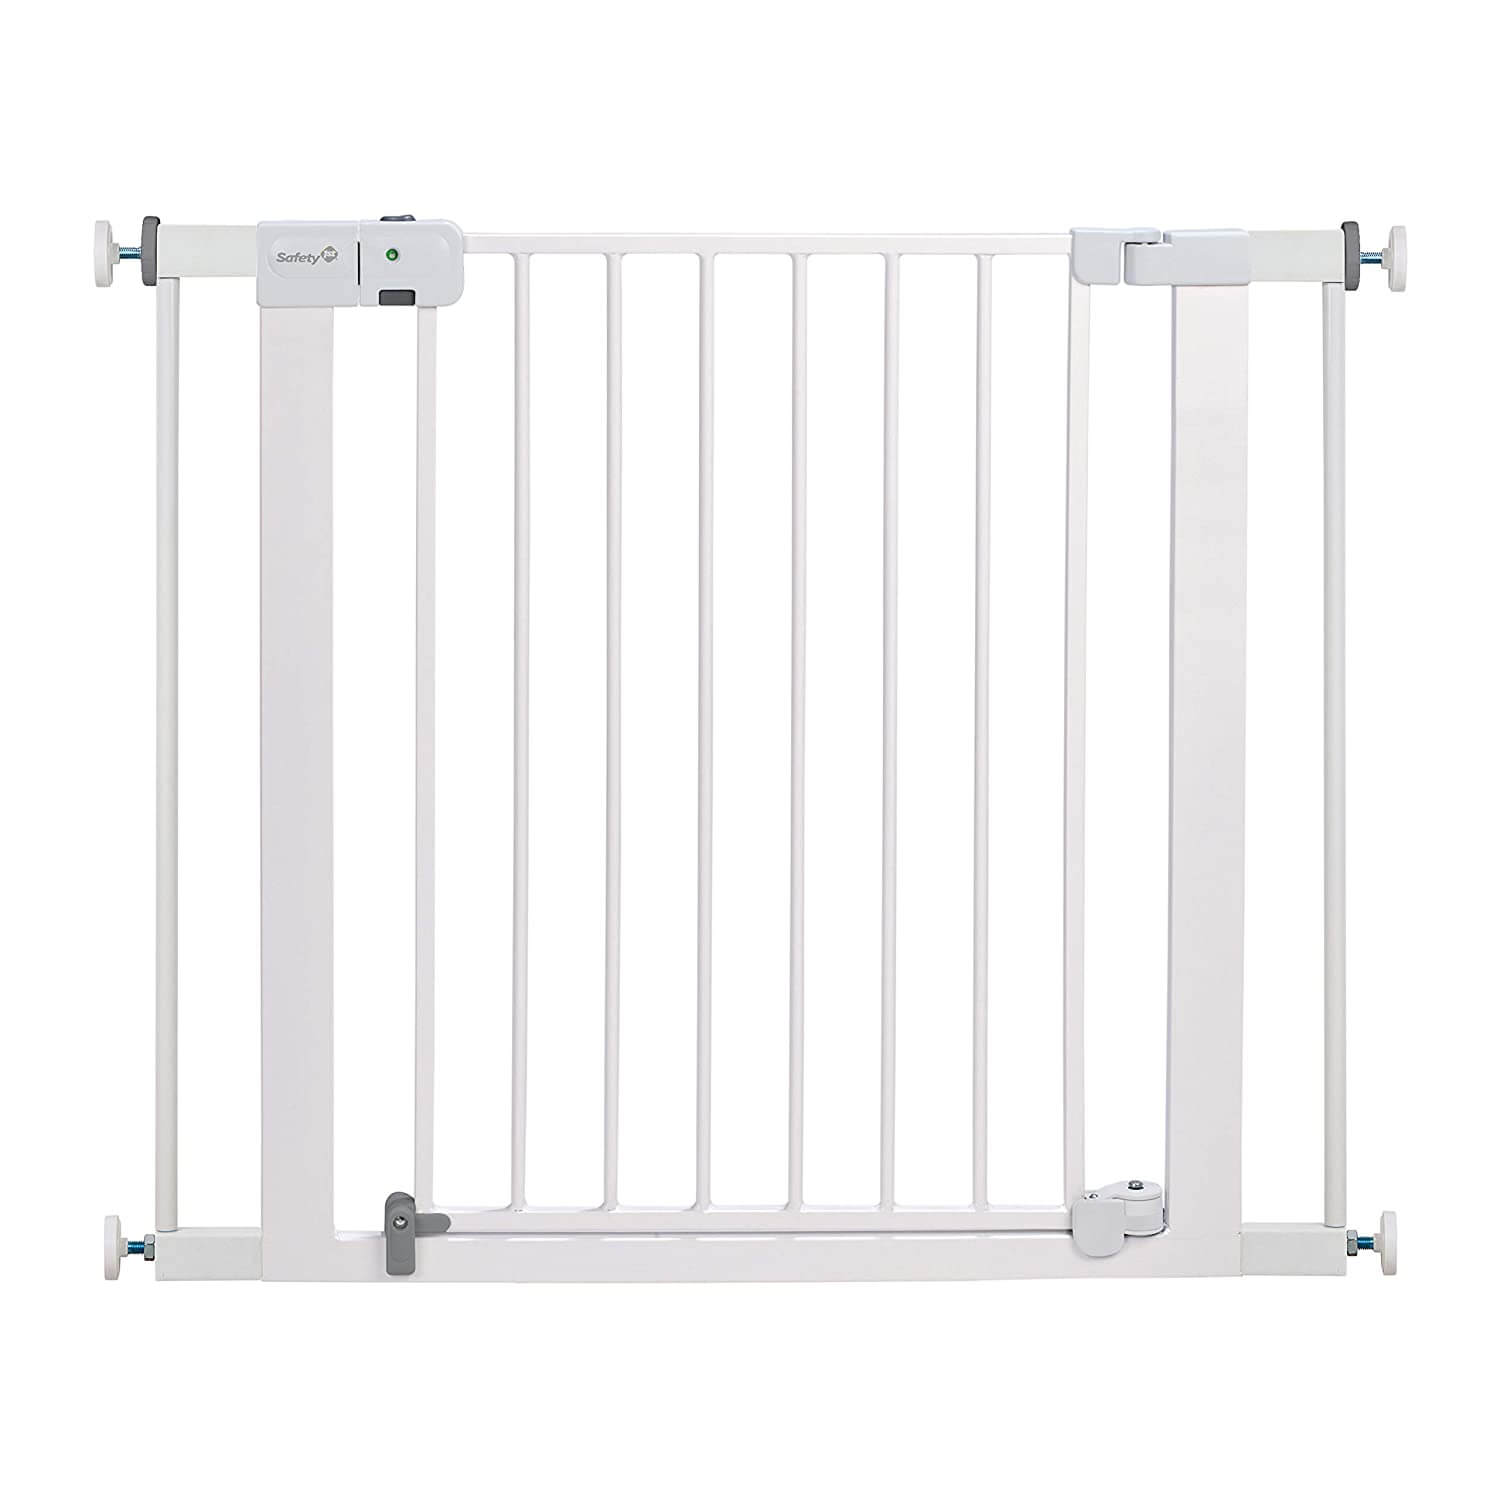 Safety 1st Easy Install best baby gates